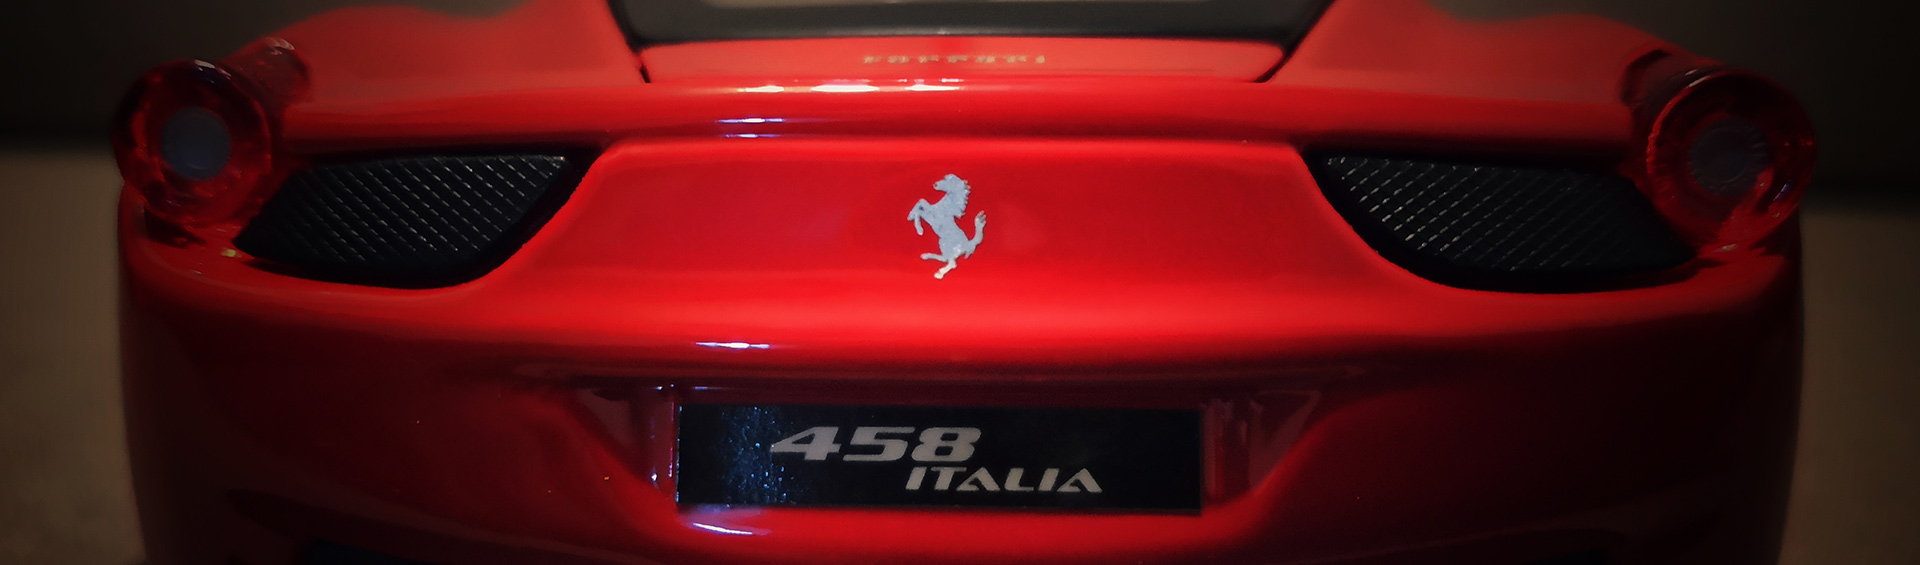 Ferrari Burago - dve razmere i dve serije